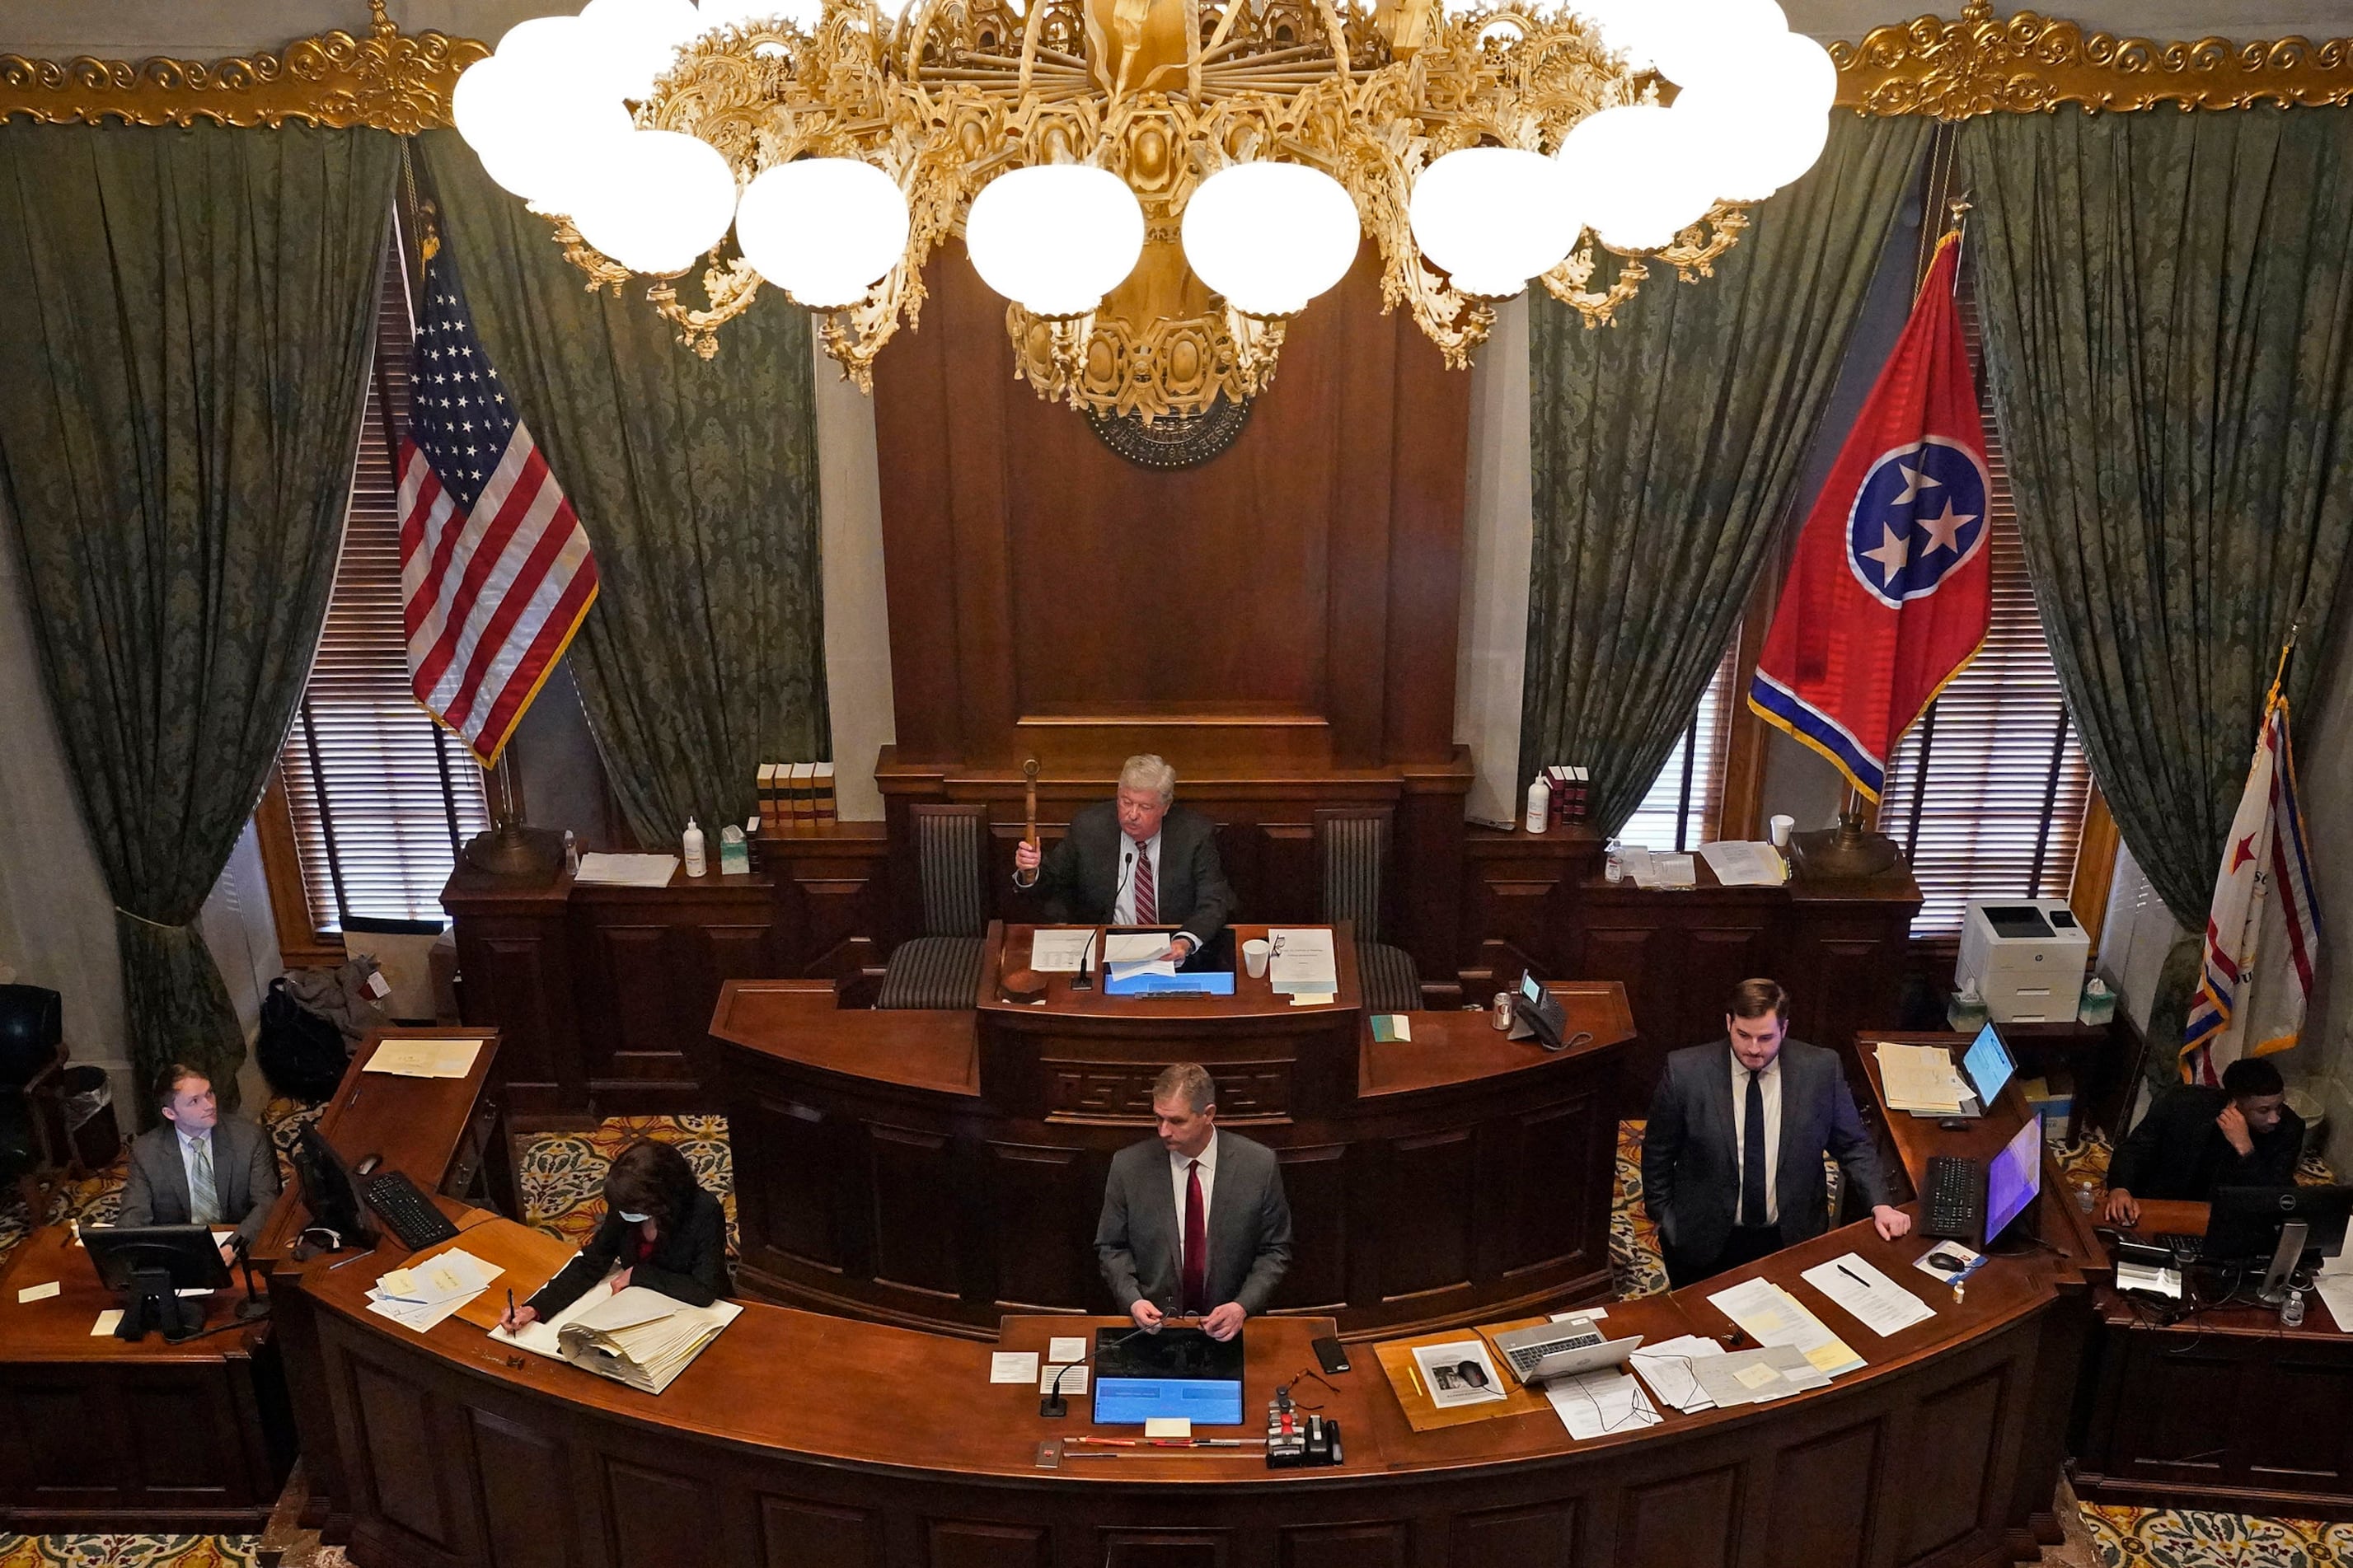 People work in an ornate legislative chamber.